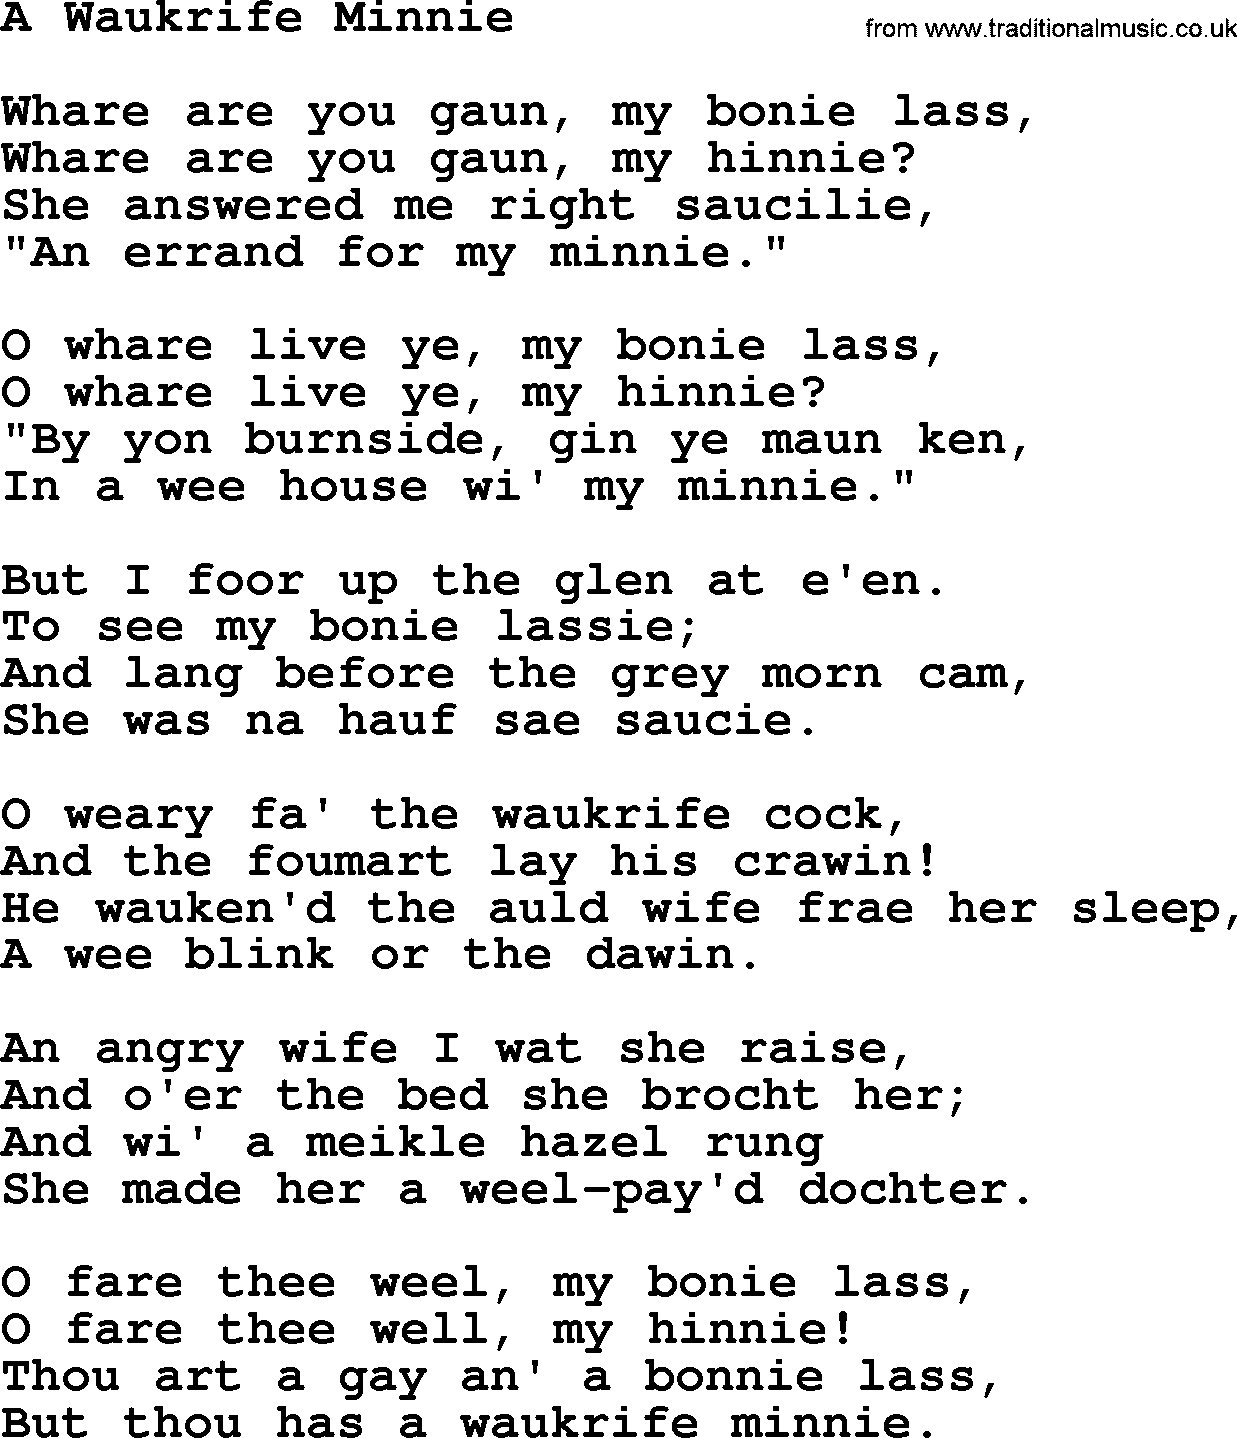 Robert Burns Songs & Lyrics: A Waukrife Minnie